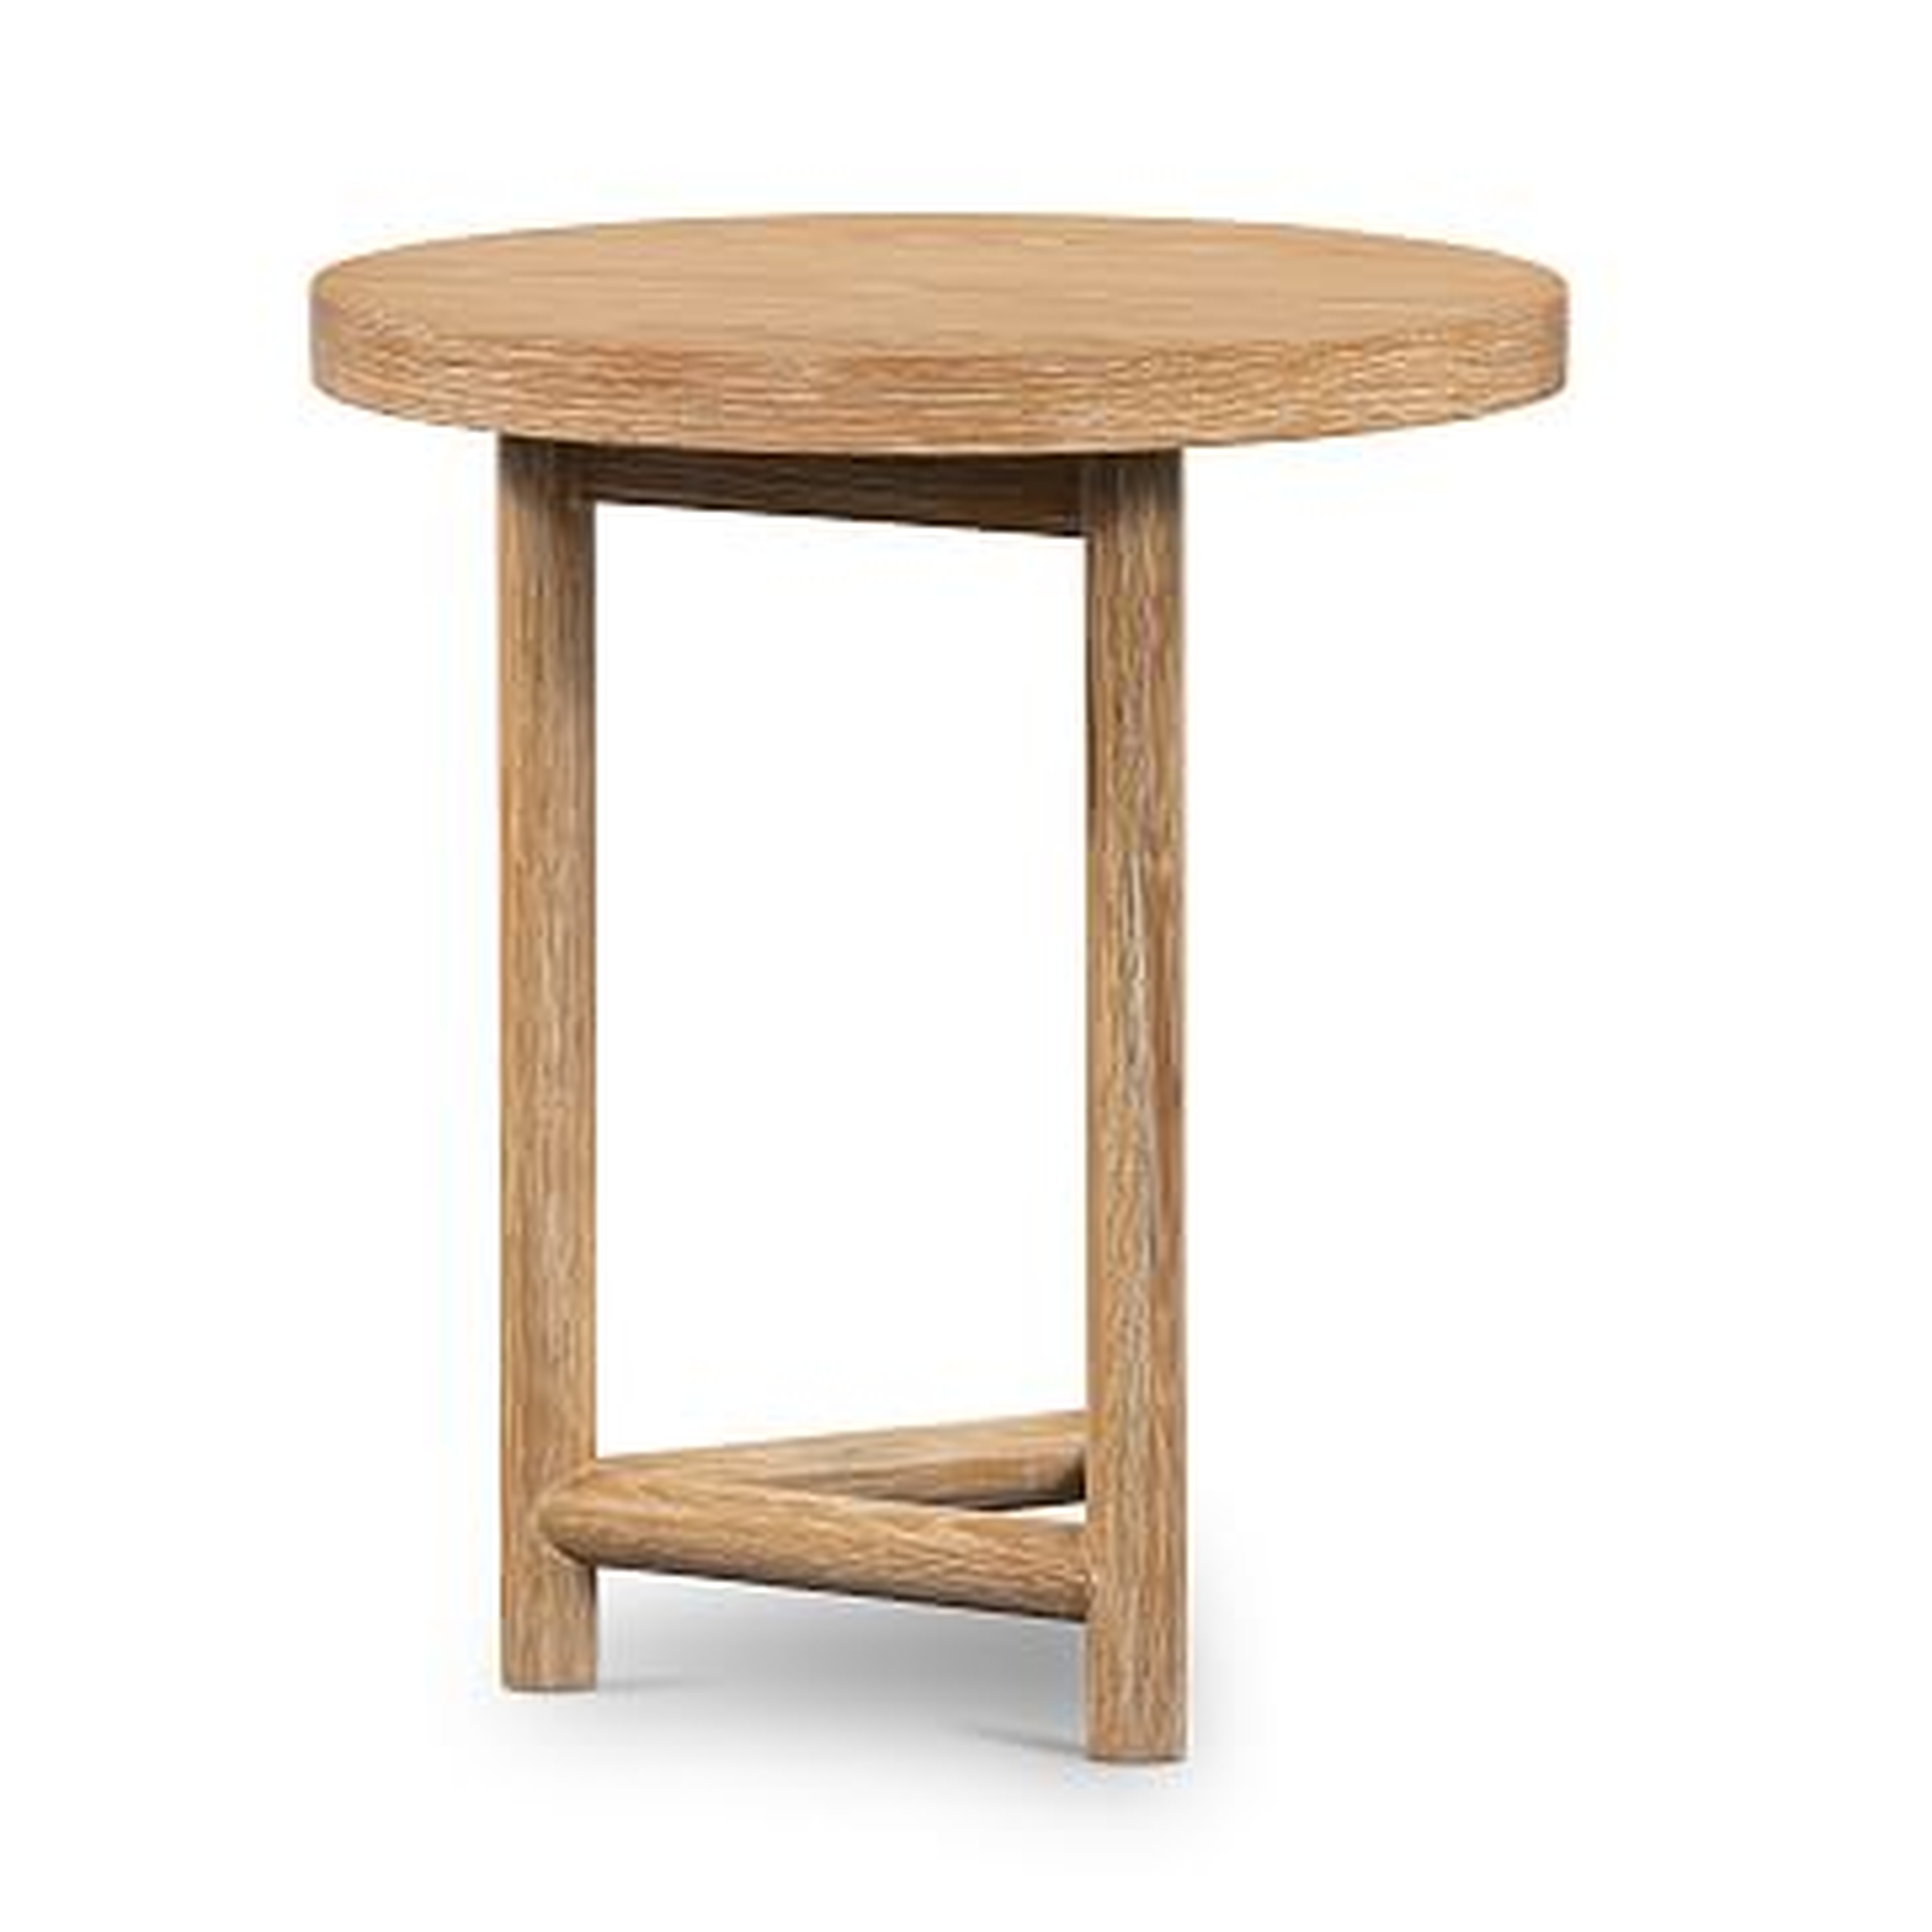 Geometric Oak Base Side Table, Round - West Elm